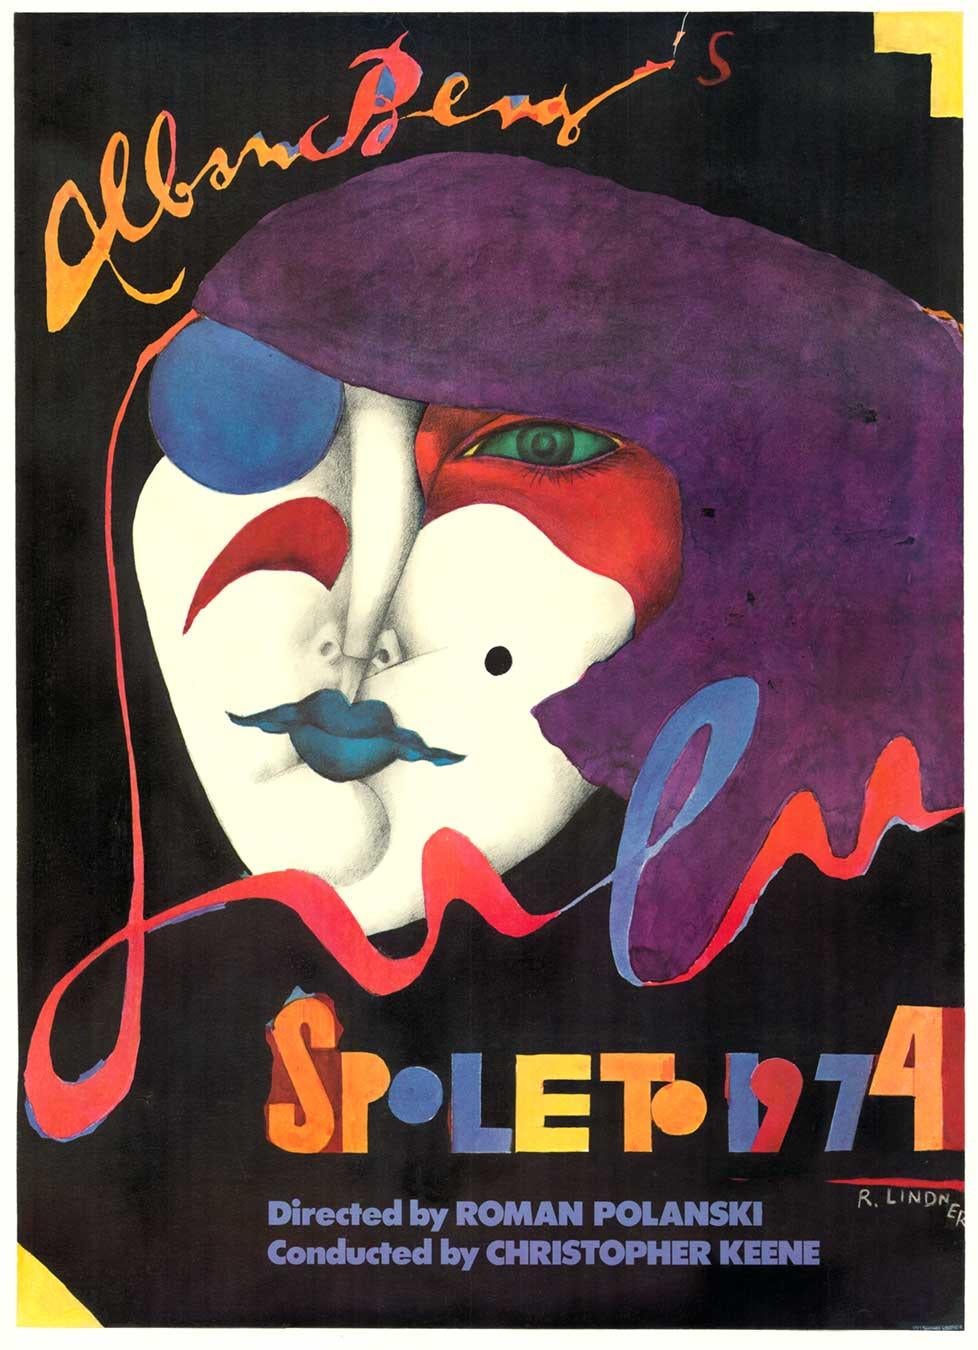 Richard Lindner Figurative Print - Original "Spoleto 1974, Lulu Opera' vintage poster